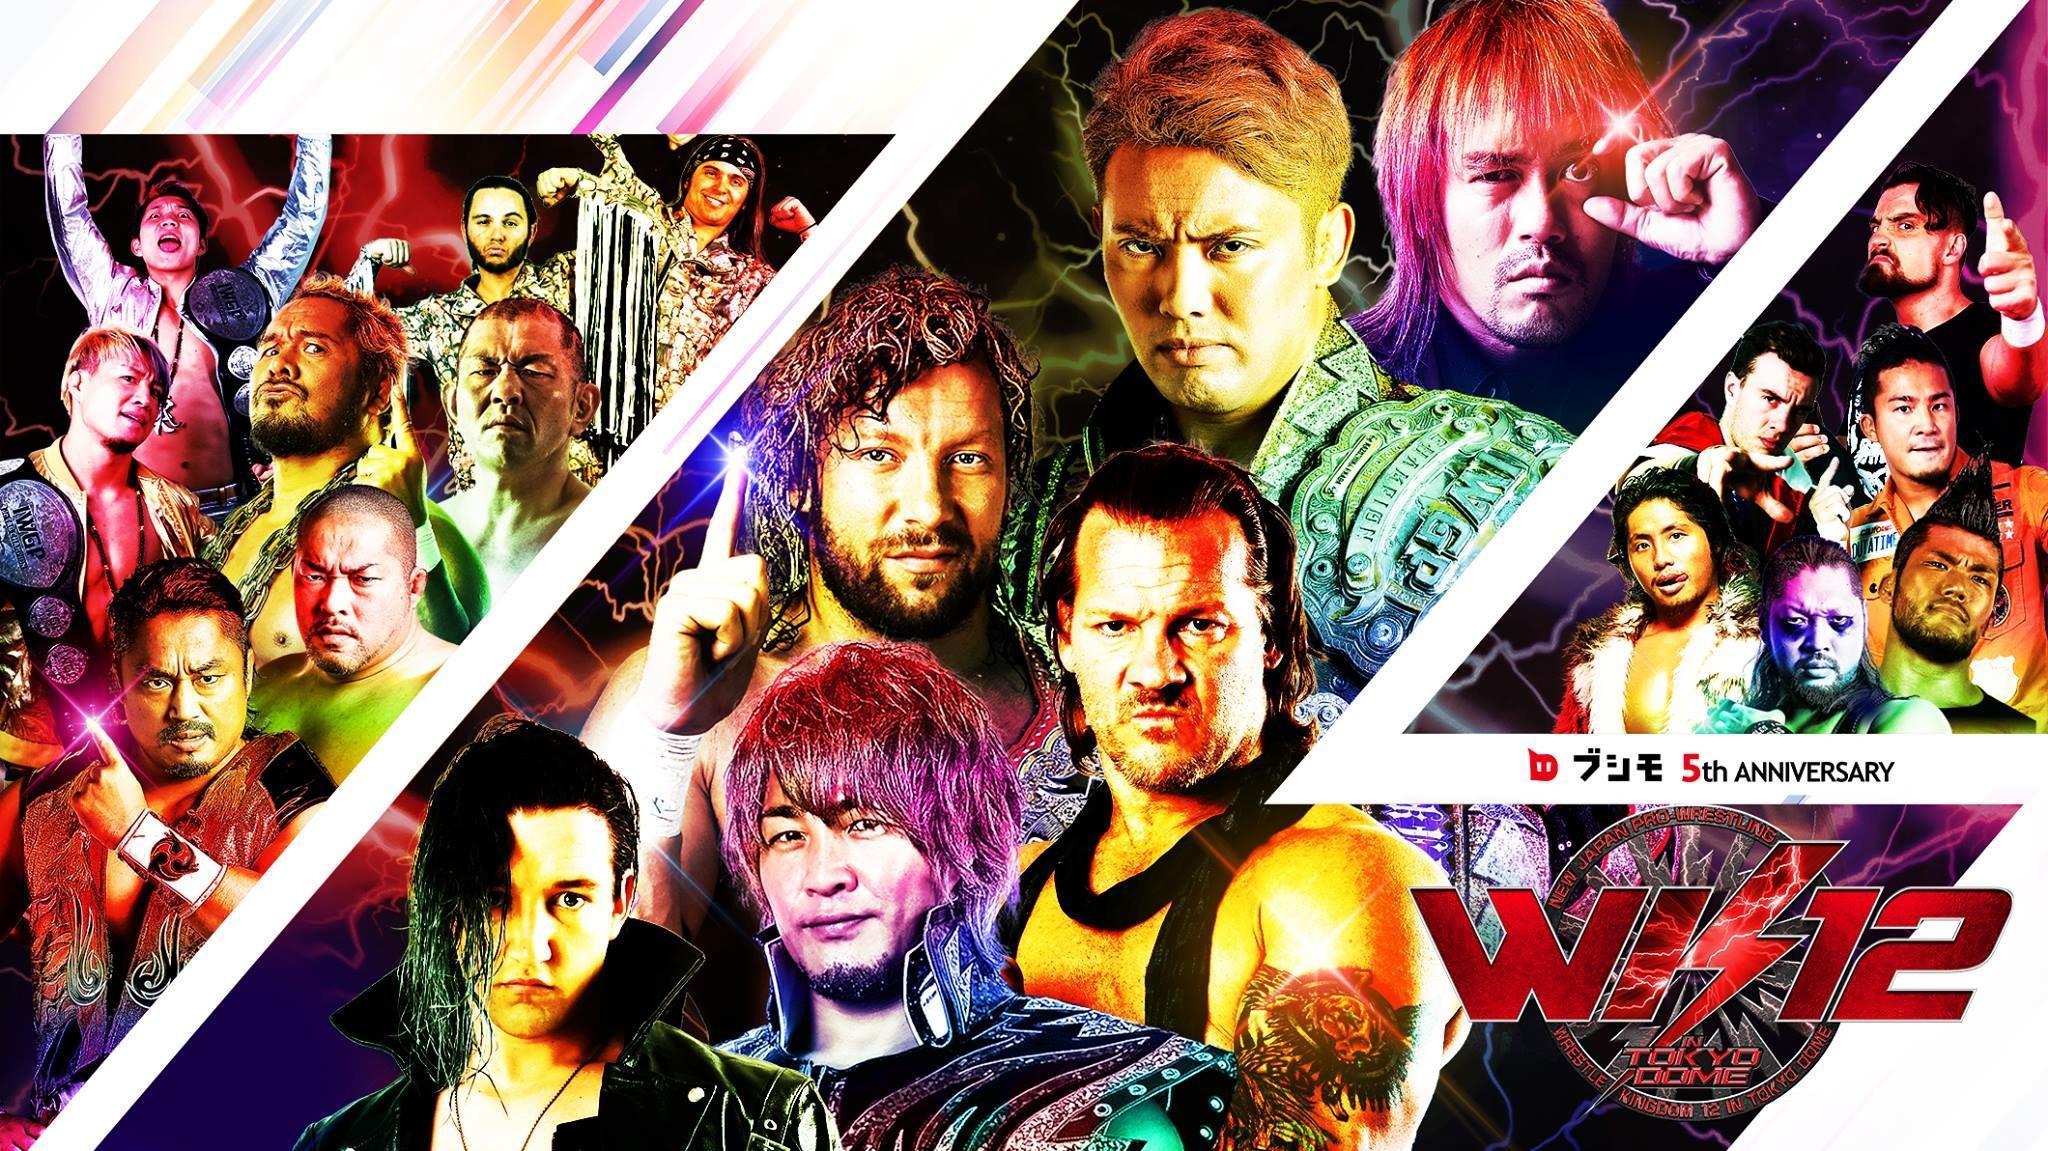 New cover photo for Wrestle Kingdom 12